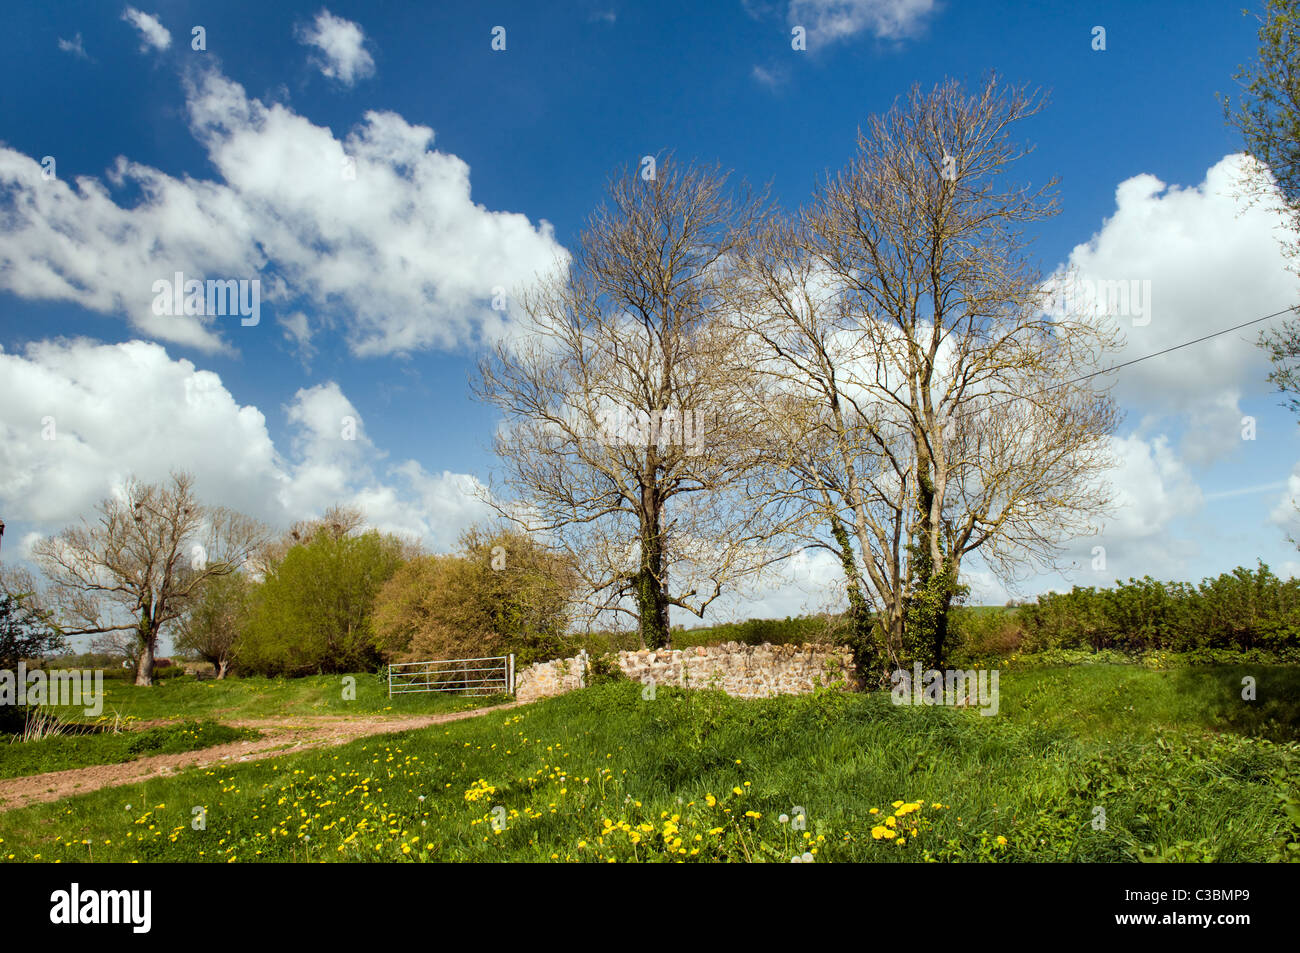 Pretty countryside scene taken near Fenny castle, Somerset levels, England Uk on bright sunny spring day Stock Photo